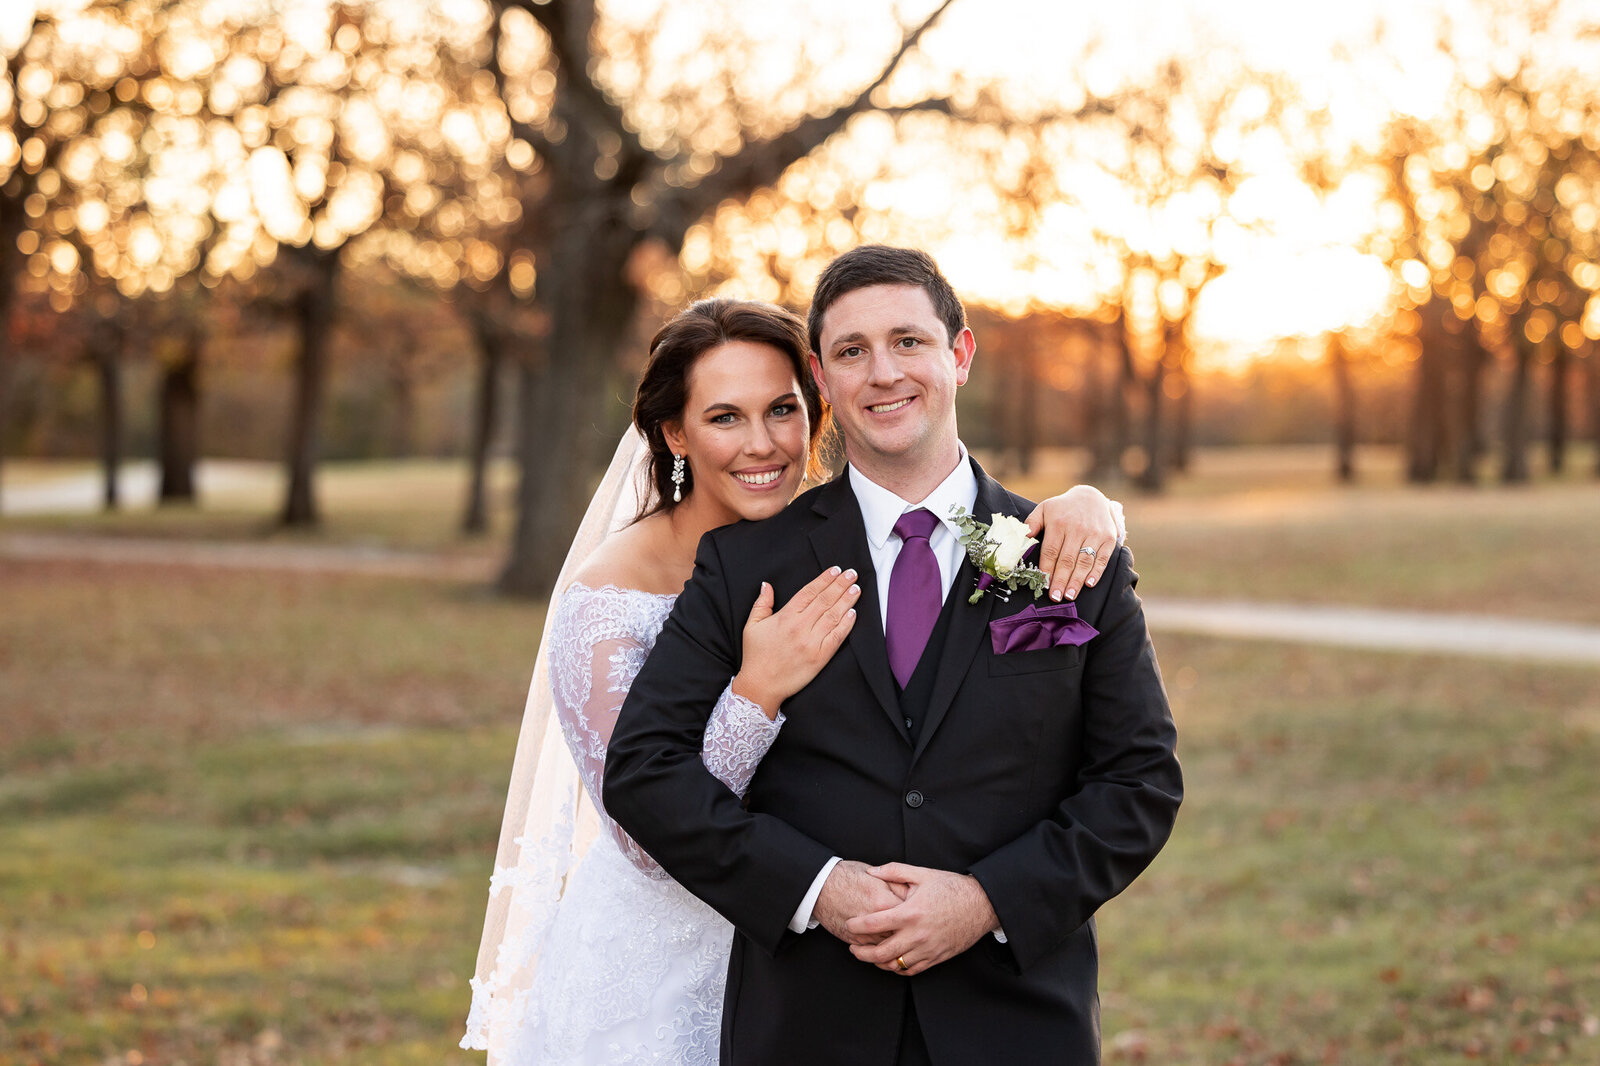 Catholic wedding photography at Chandler Park in Tulsa Oklahoma